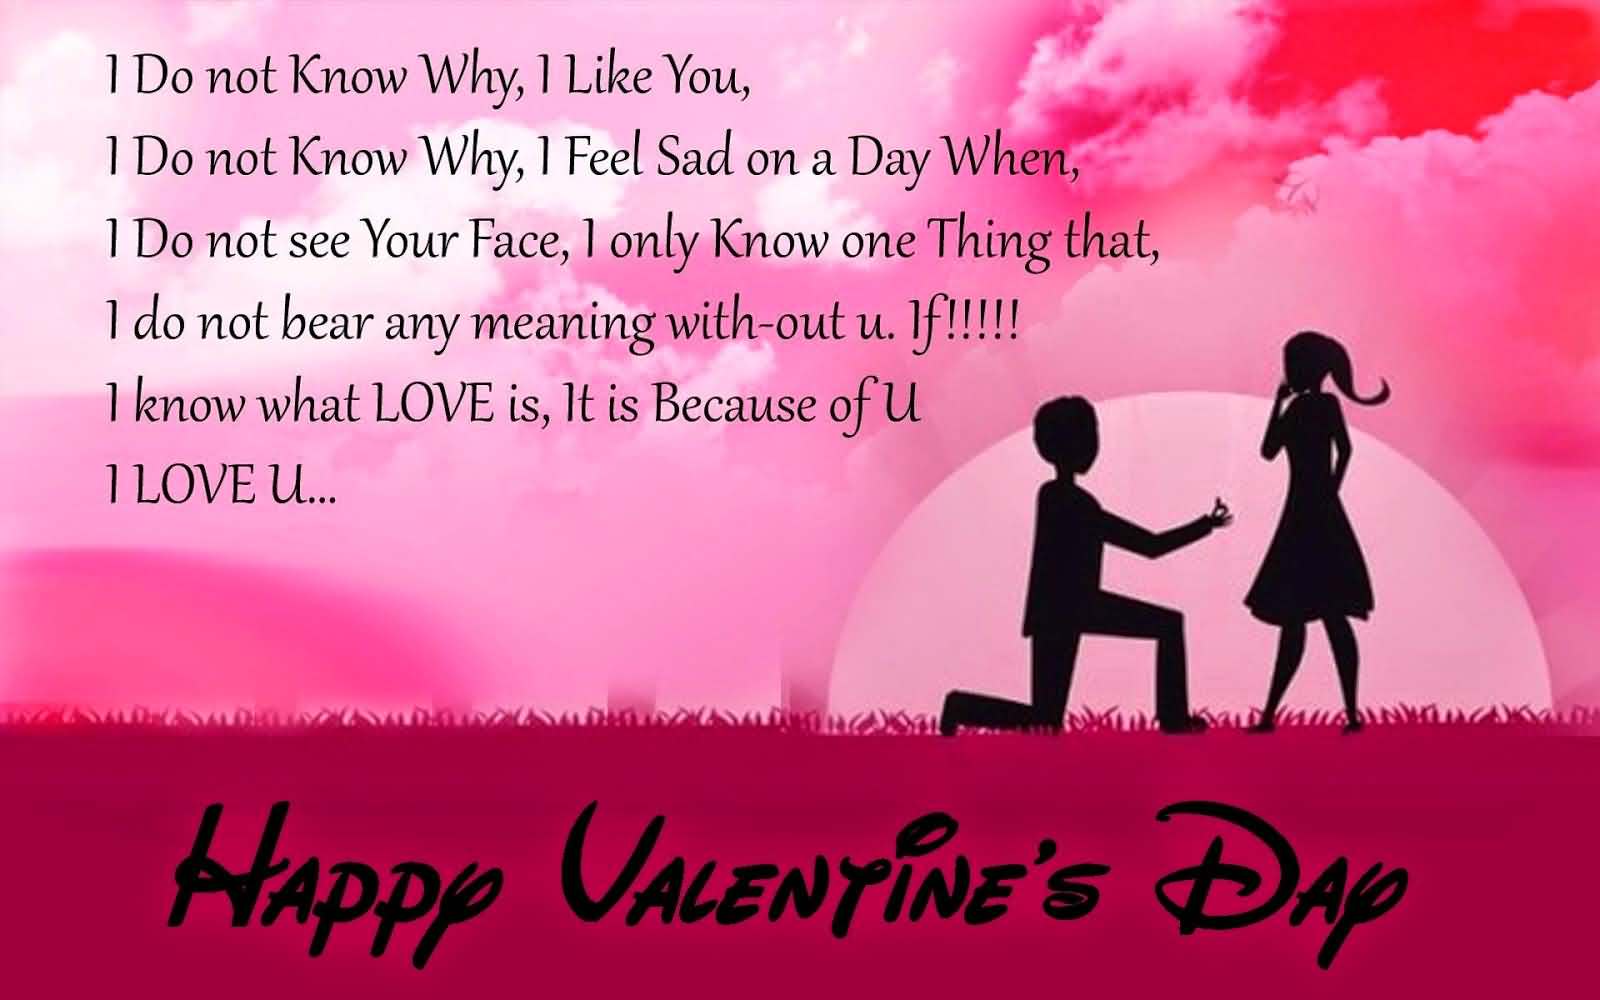 Happy Valentine’s Day I love you